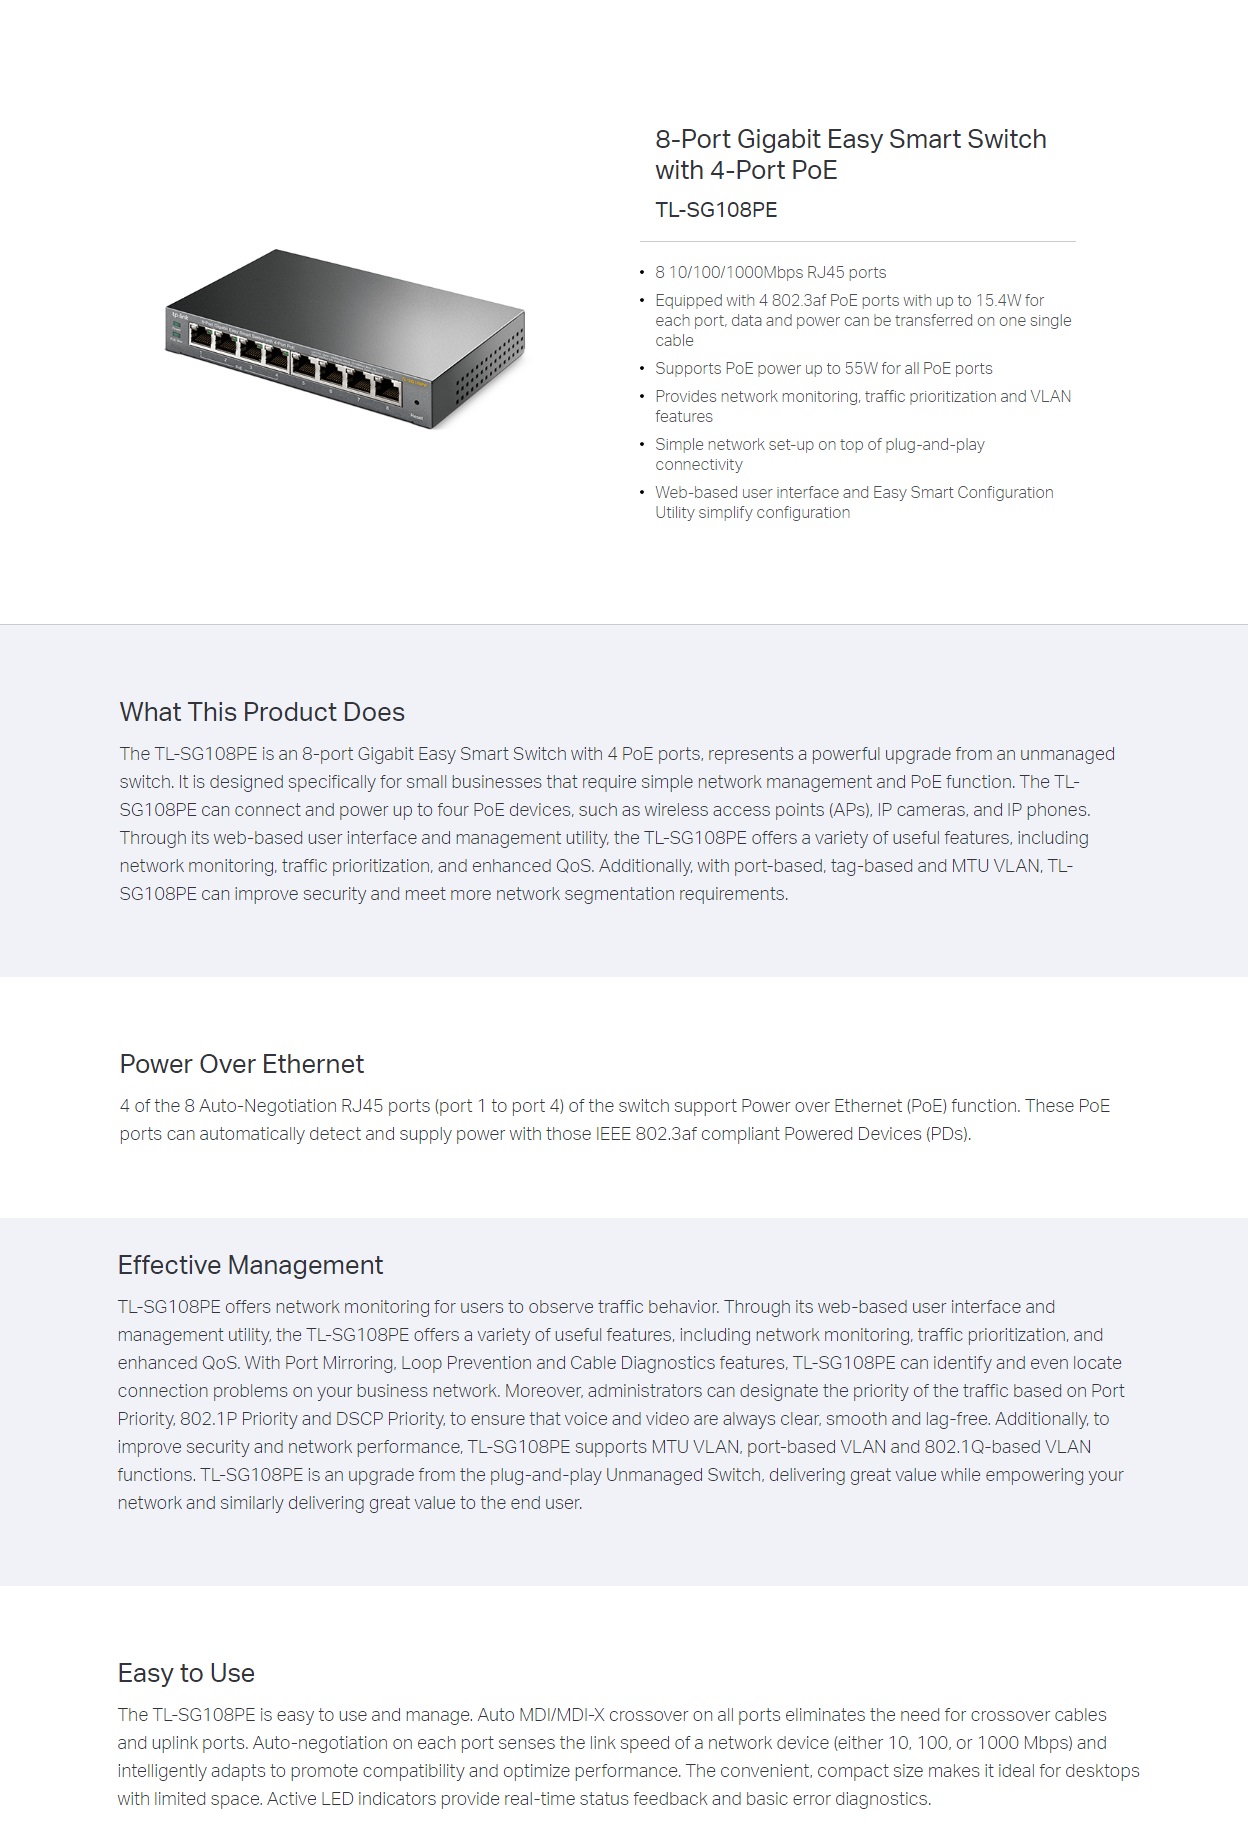  POE Switch: 8-Port Gigabit Easy Smart  15KB Jumbo frame, IEEE 802.3x flow control  